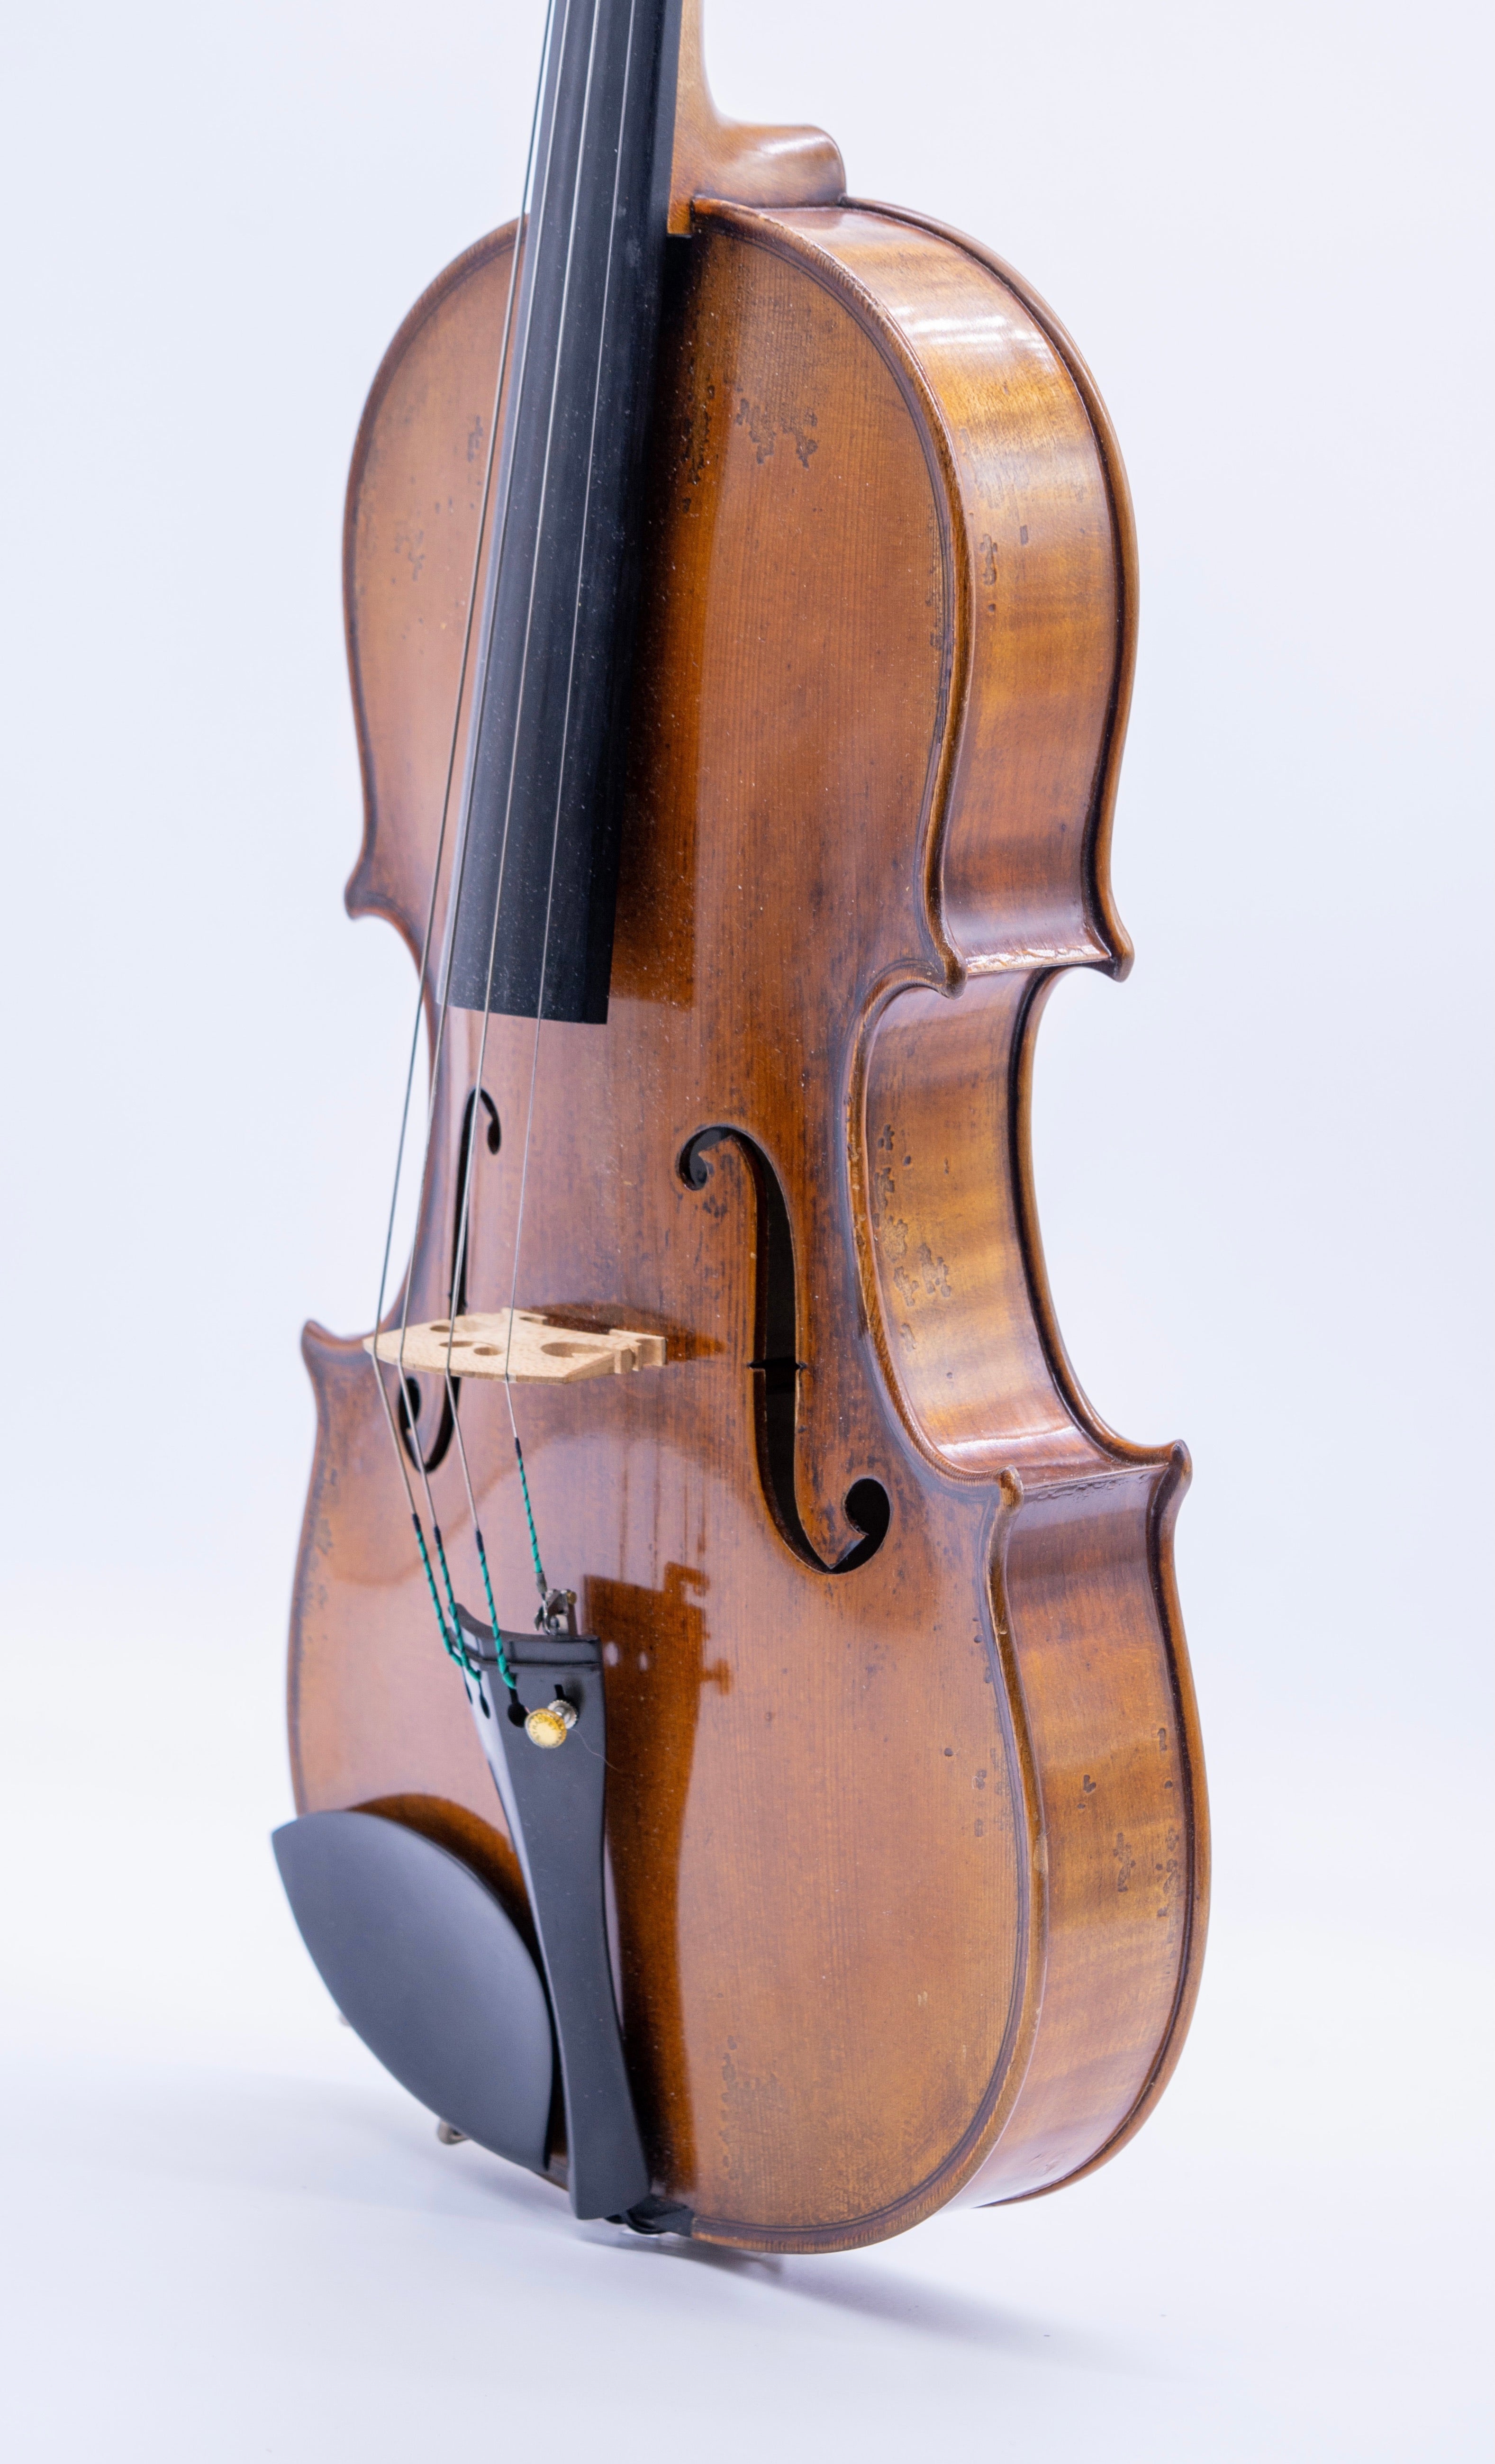 Stefan Petrov Superior Viola, Guadagnini Model 3/4” Cohen Violins